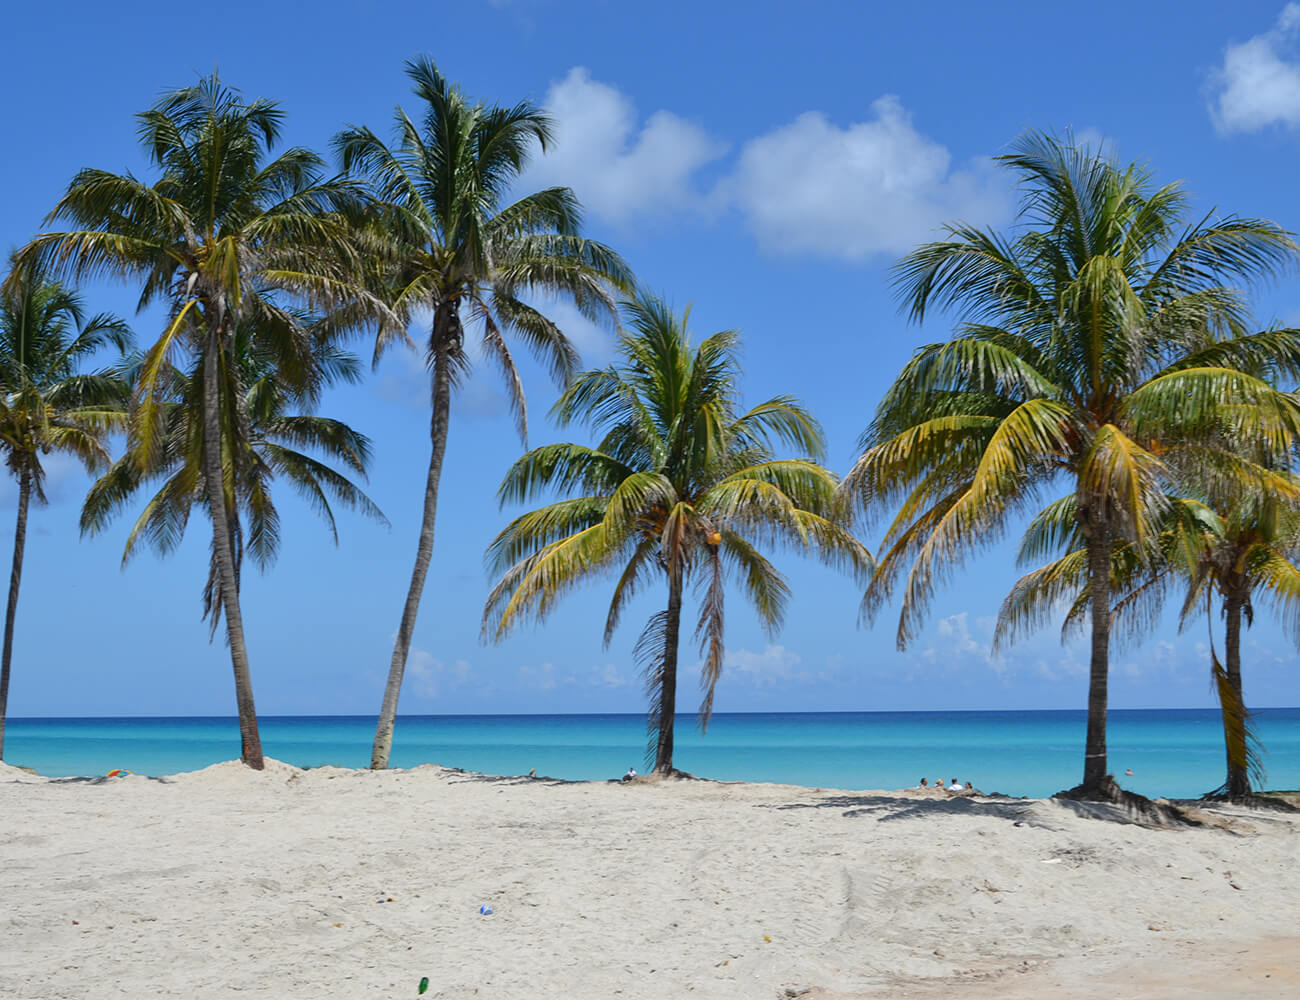 Beach Coconut Tree Scenery Backdrop For Photography IBD-24595